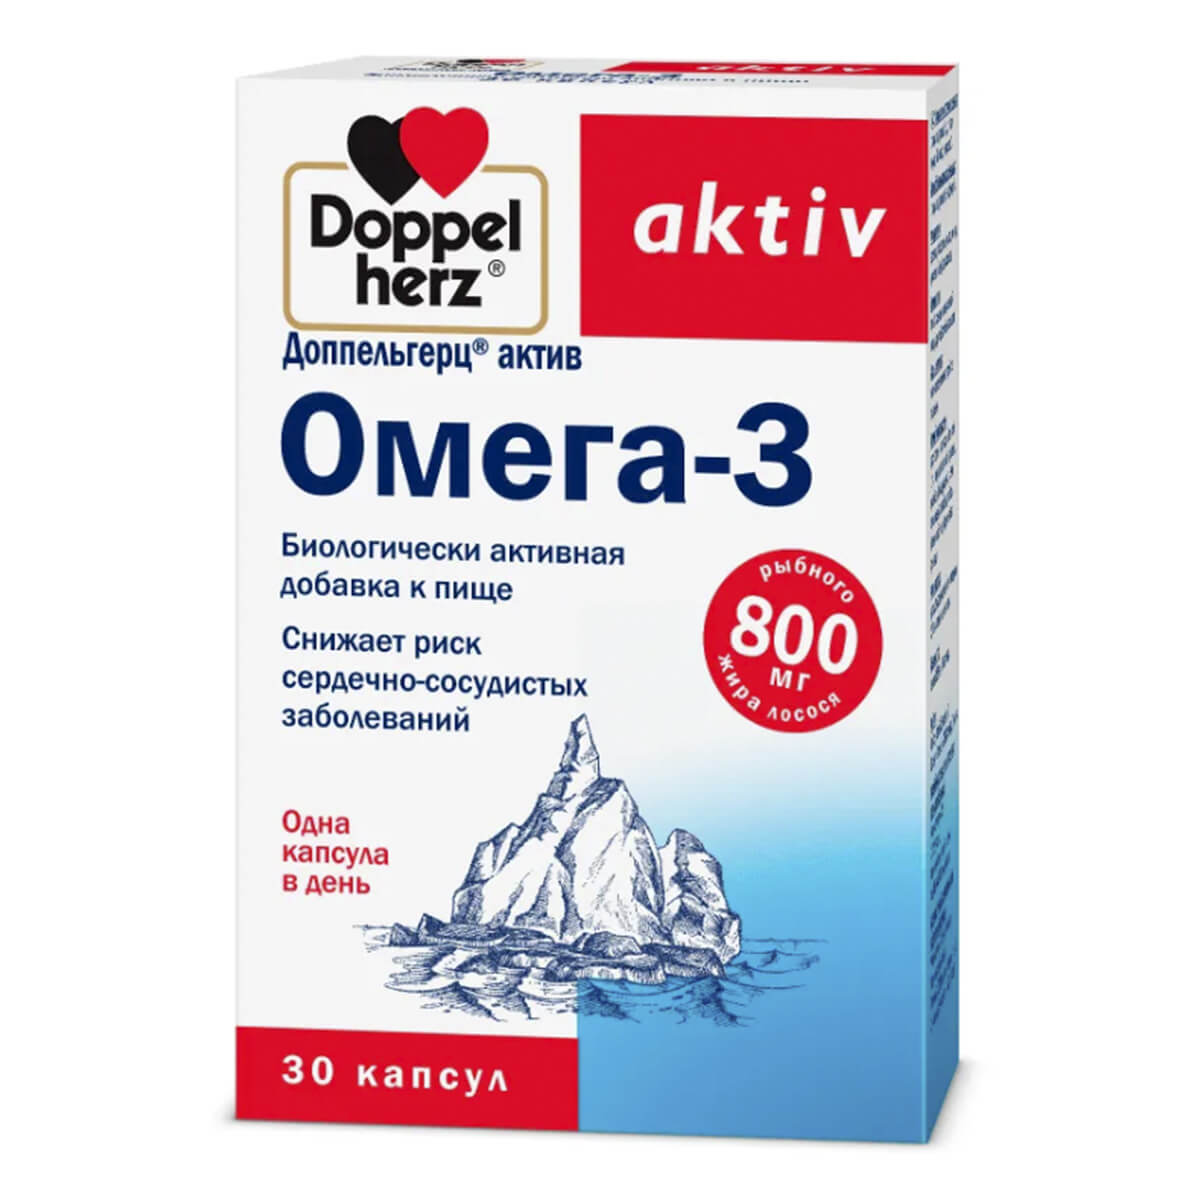 Омега-3, 1186 мг, 30 таблеток, Доппельгерц Актив